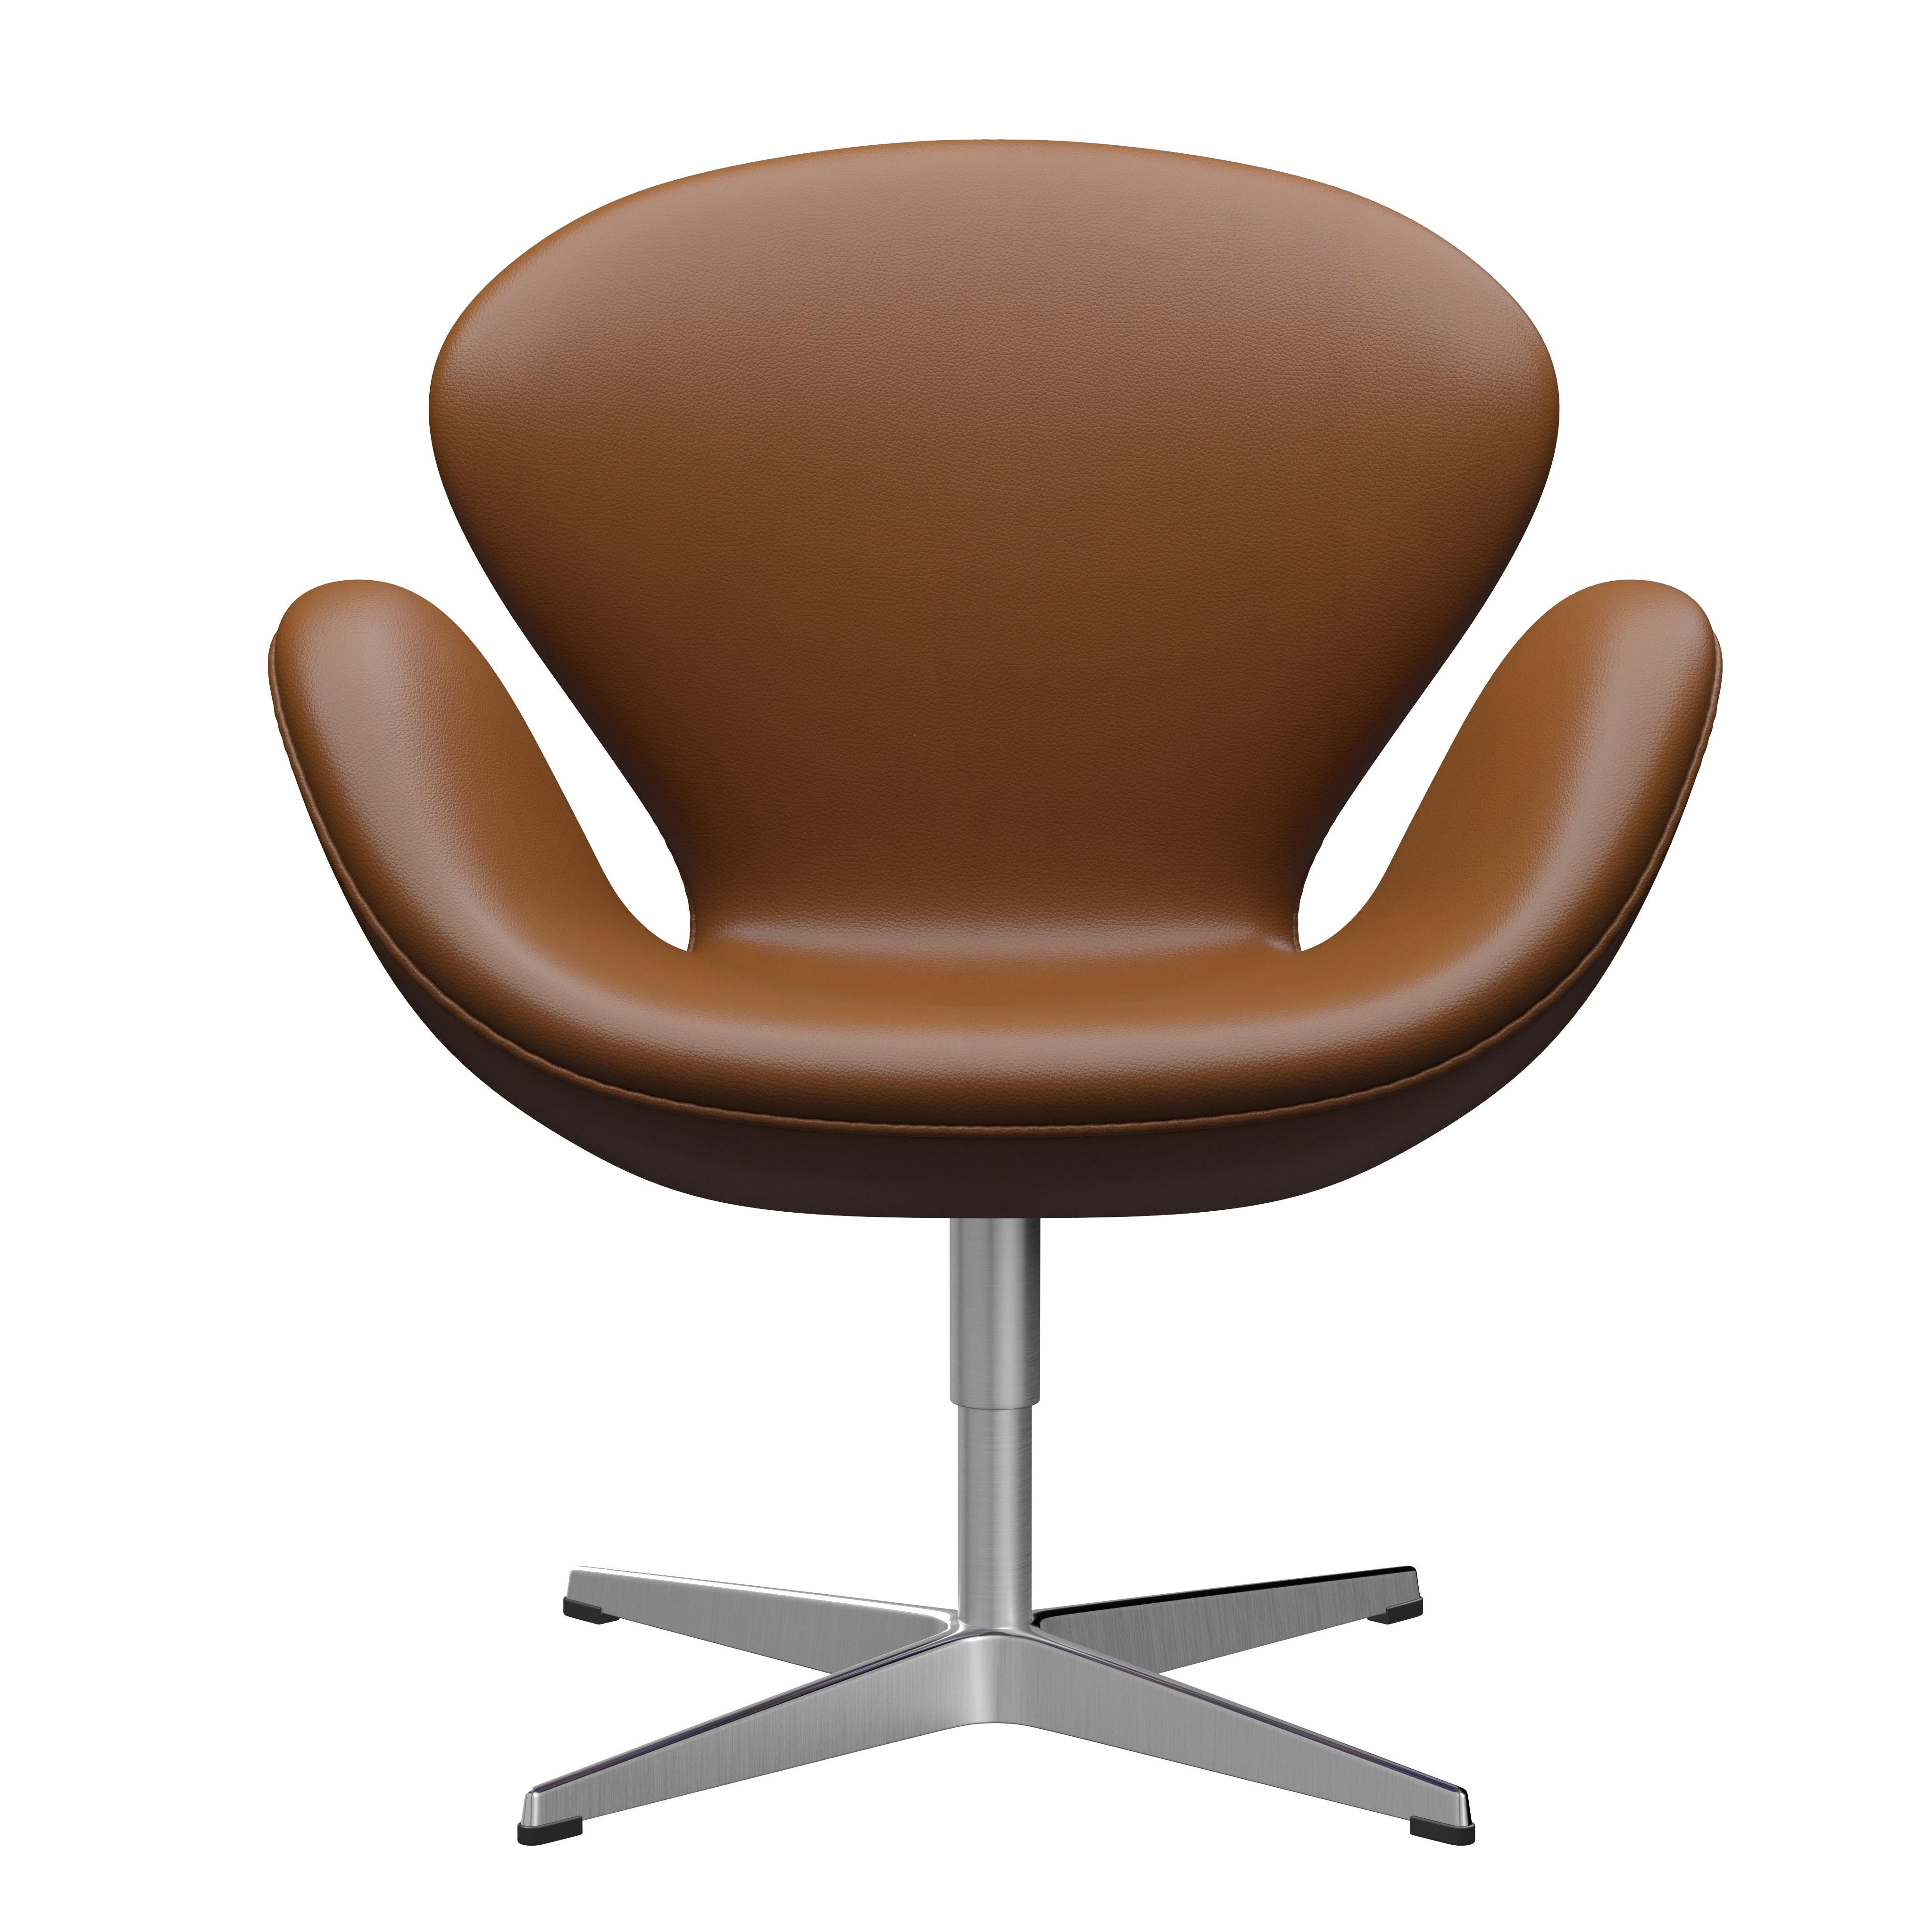 Arne Jacobsen 'Swan' Chair for Fritz Hansen in Leather Upholstery (Cat. 4) For Sale 11